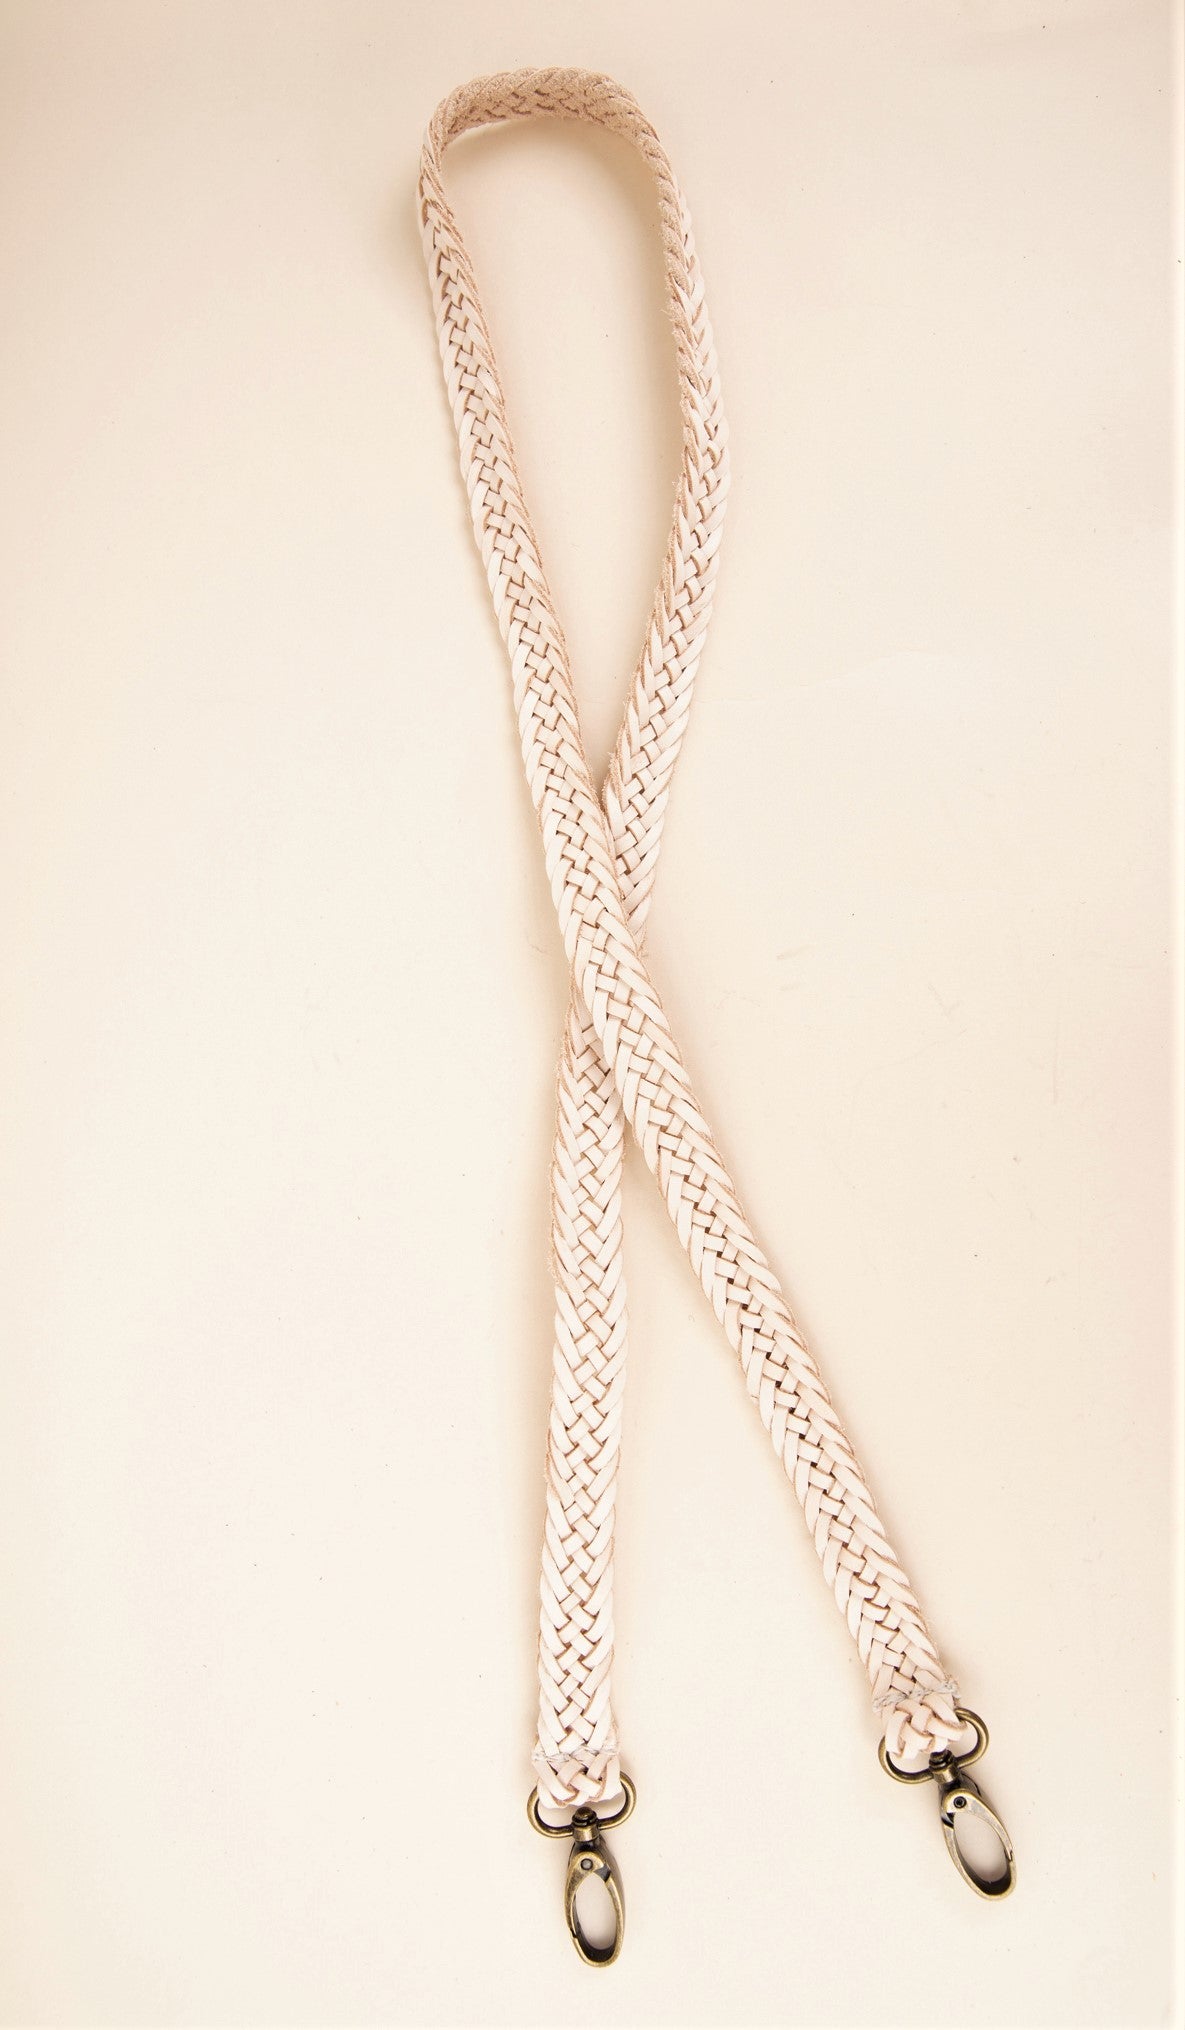 Braided Straps – Vintage Boho Bags